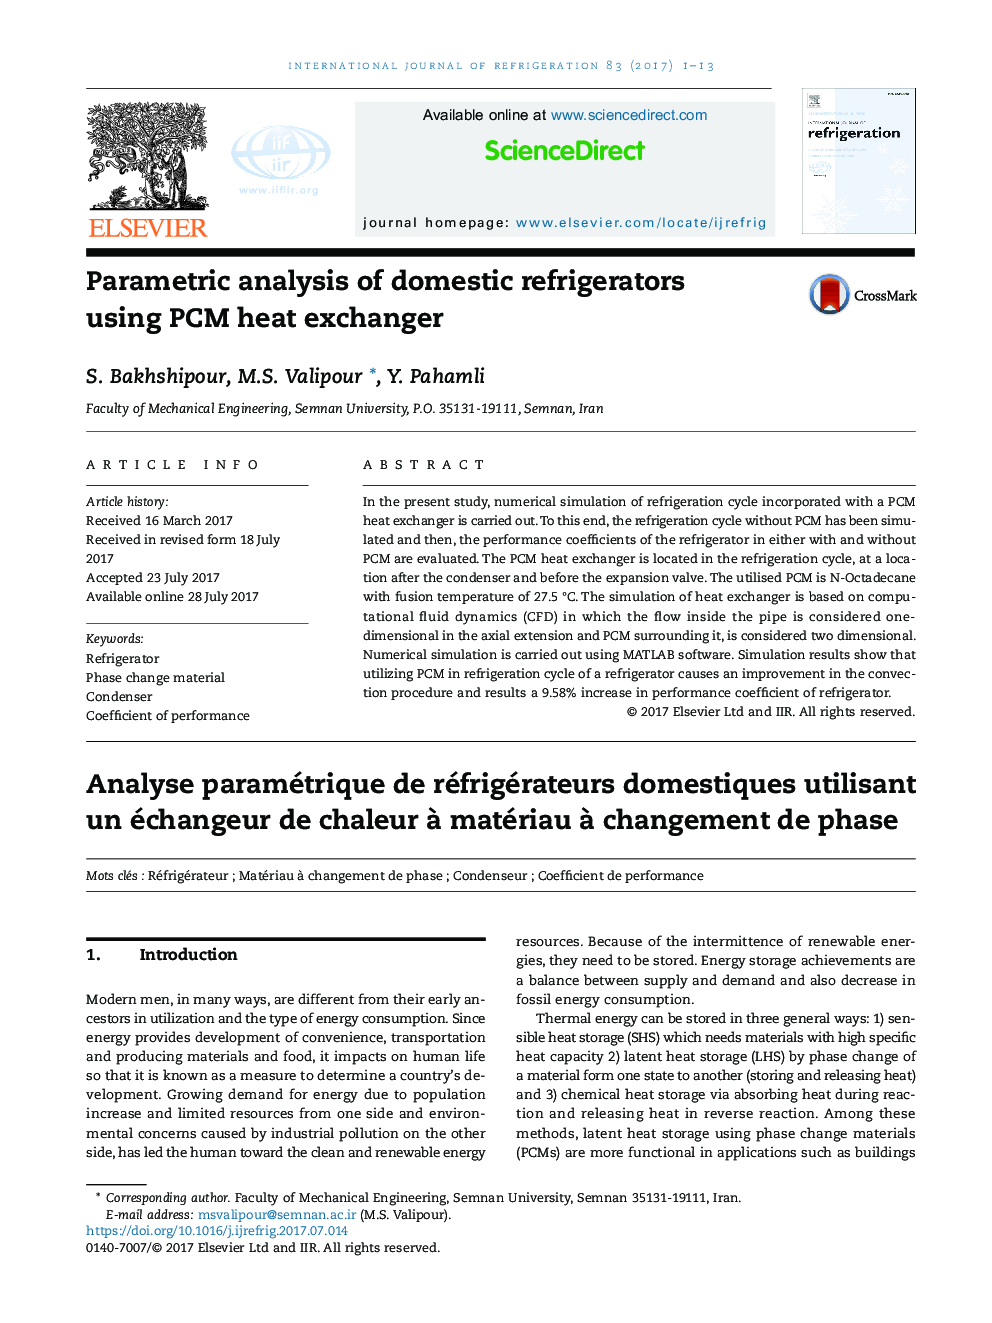 Parametric analysis of domestic refrigerators using PCM heat exchanger